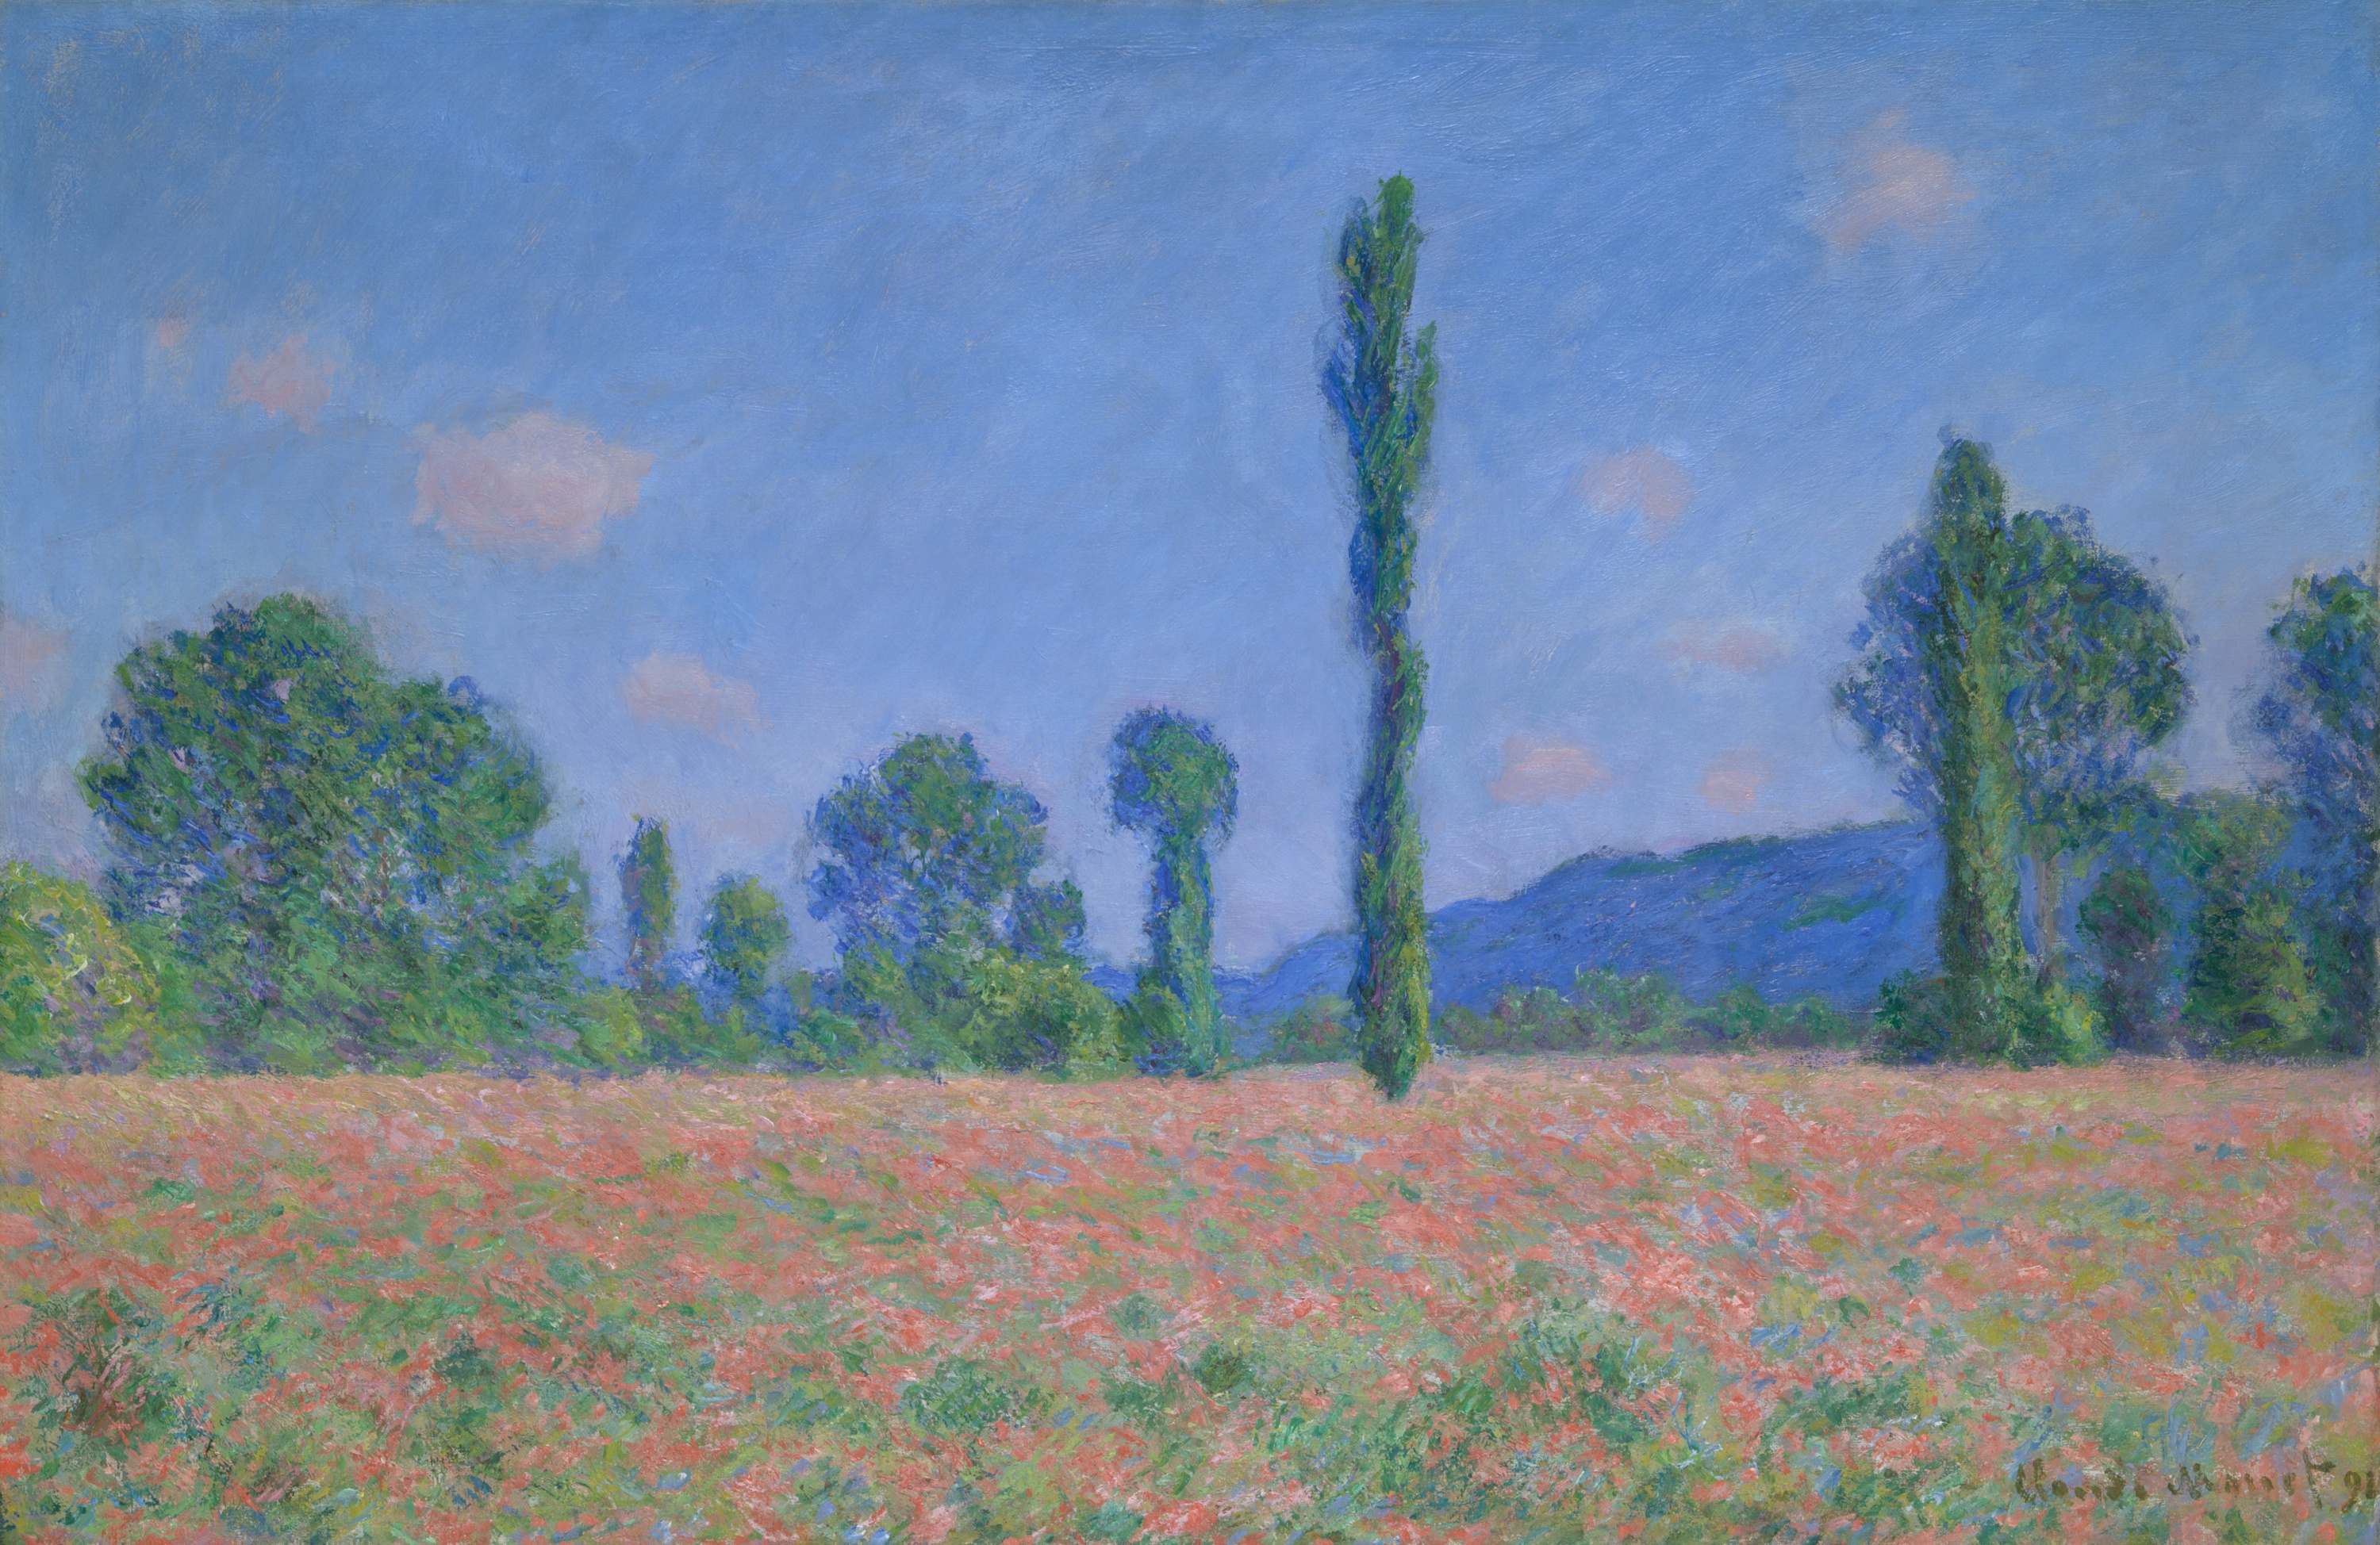 Pipacsmező (Giverny) by Claude Monet - 1890/91 - 61,2 × 93,4 cm 